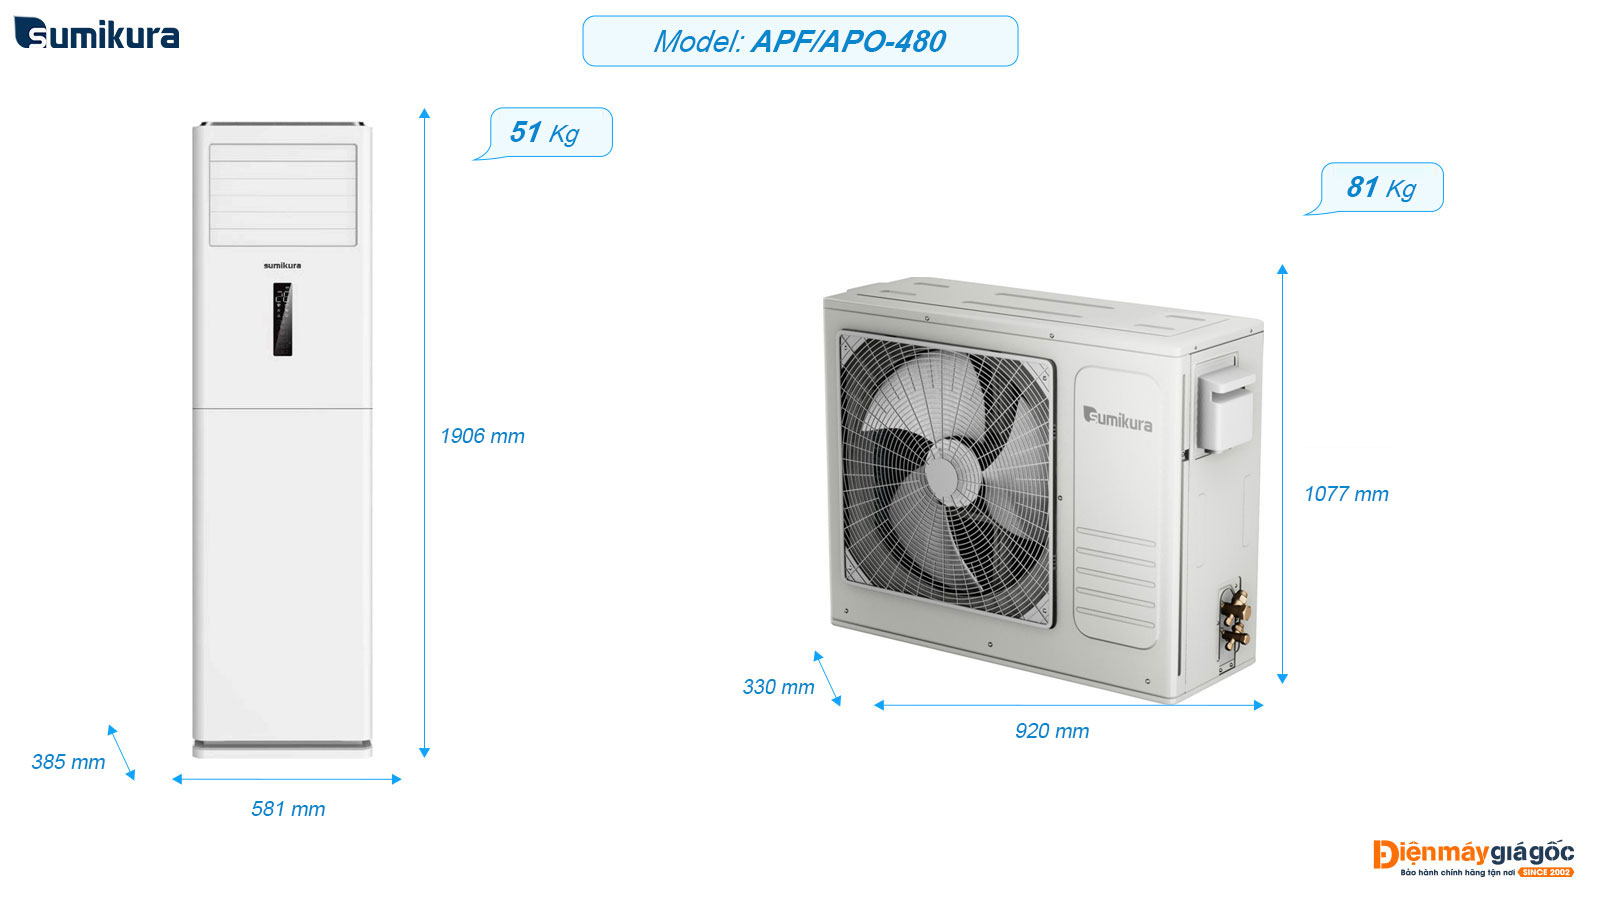 Sumikura floor standing air conditioning APF/APO-480 (5.0Hp) - Gas R410A